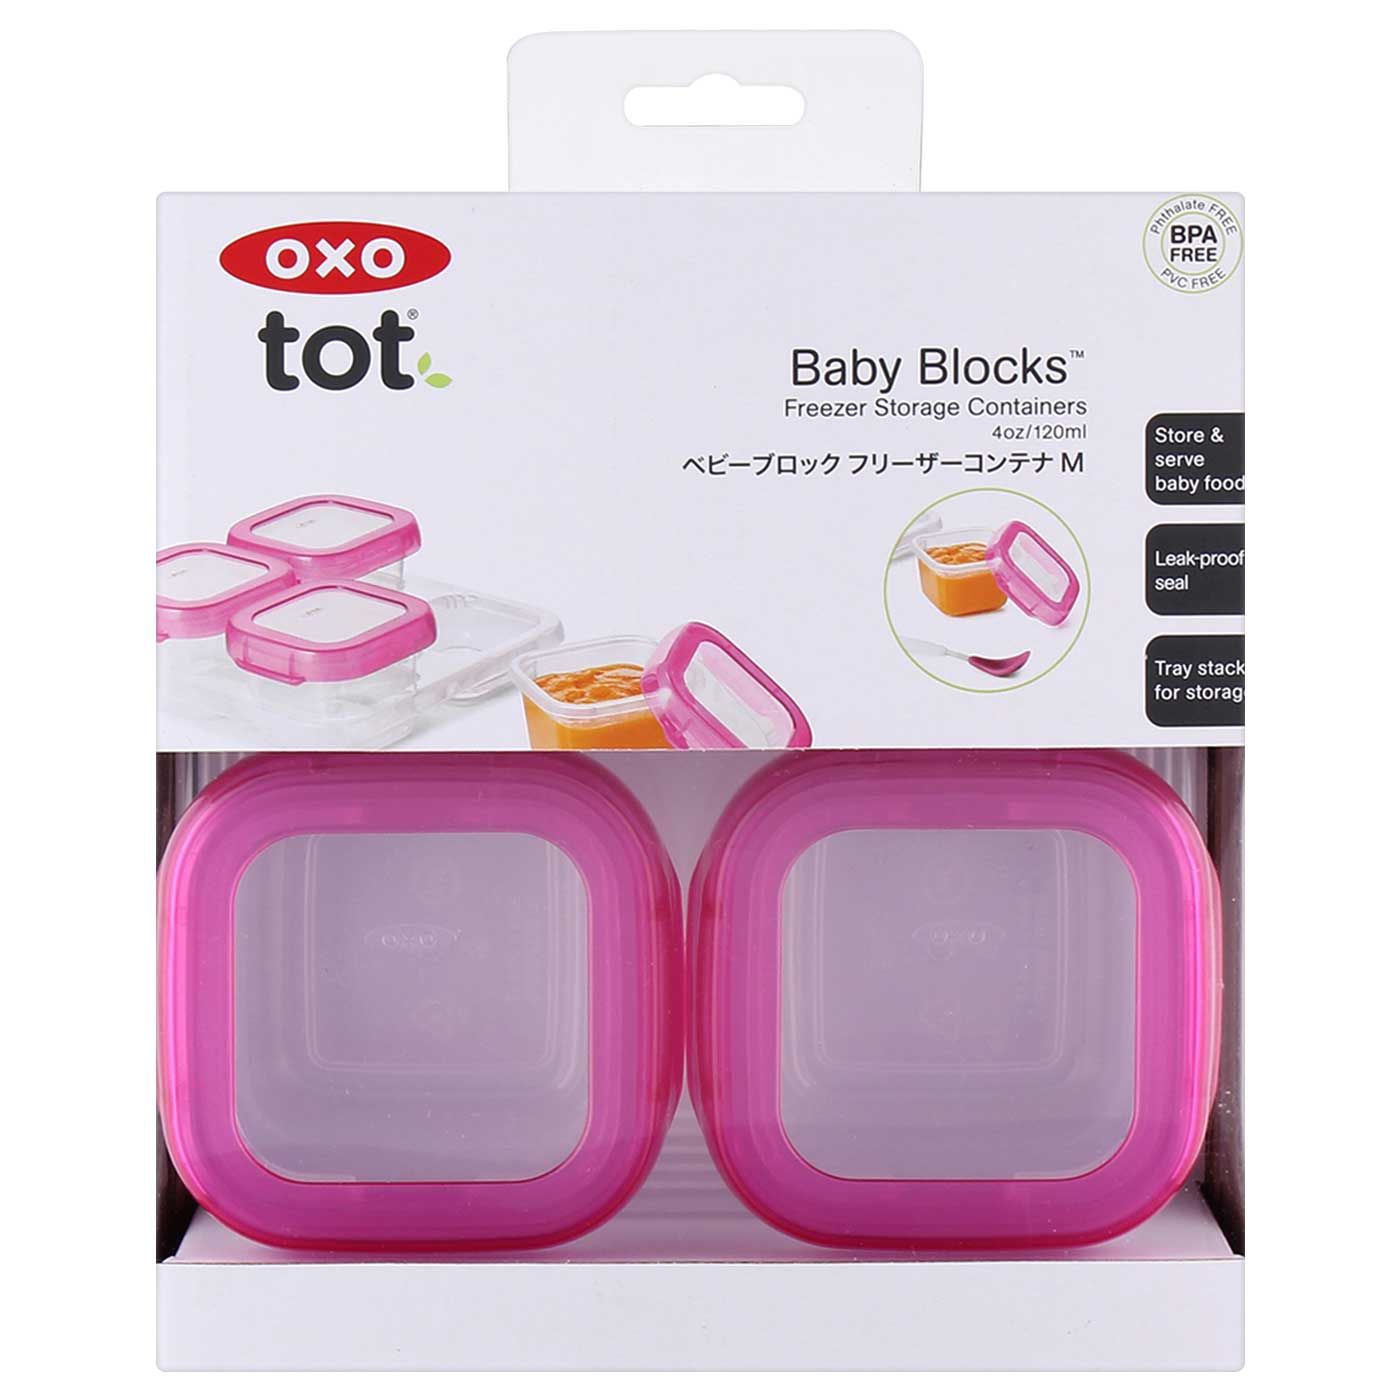 OXO Tot Baby Blocks Freezer Storage Containers 4oz Pink - 2